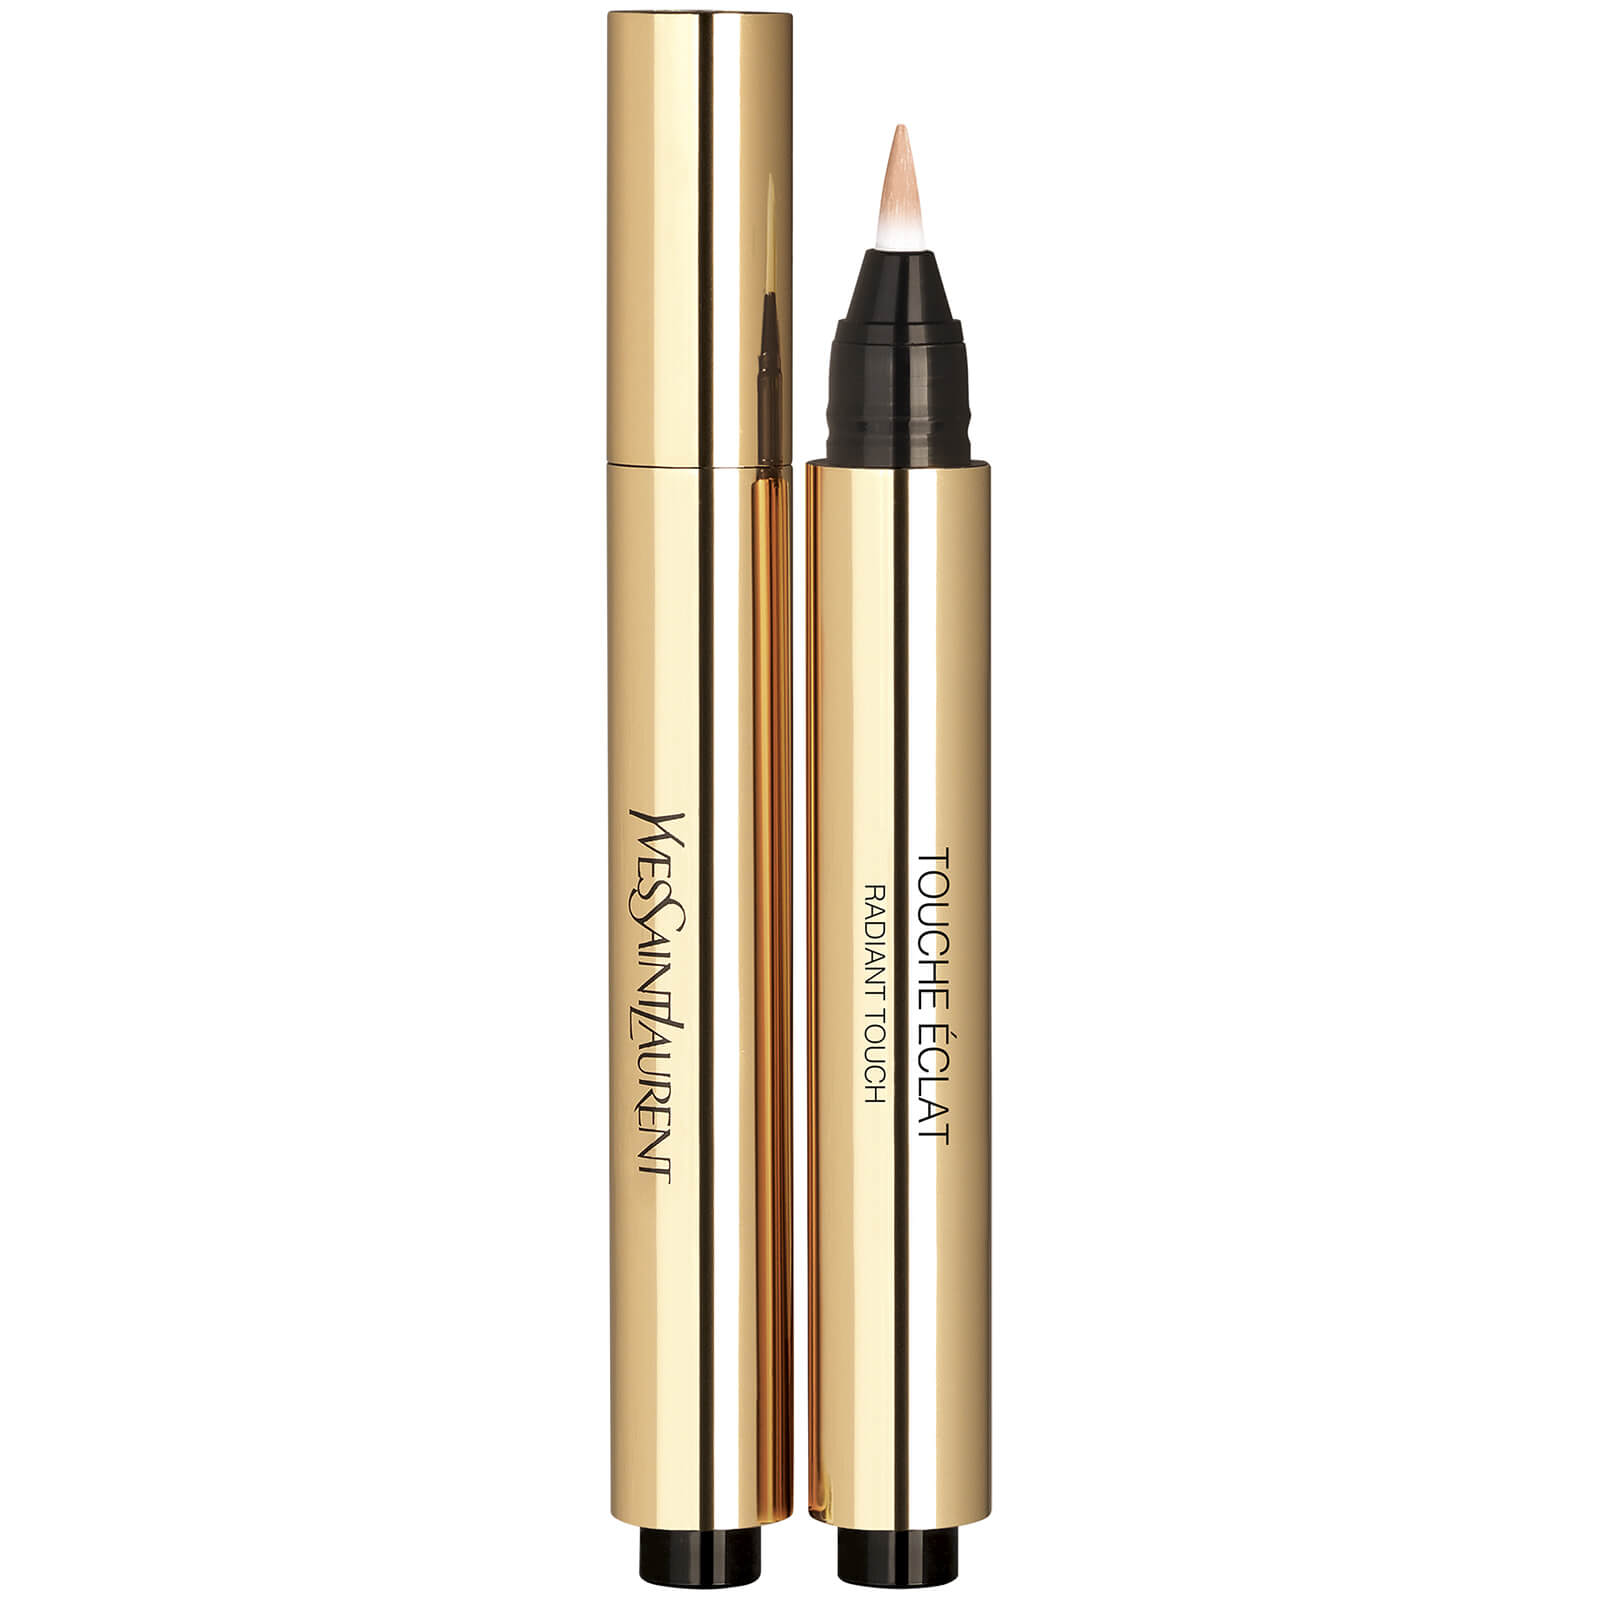 Yves Saint Laurent Touche Eclat Highlighter Pen 2.5ml (Various Shades) - 1 Luminous Radiance